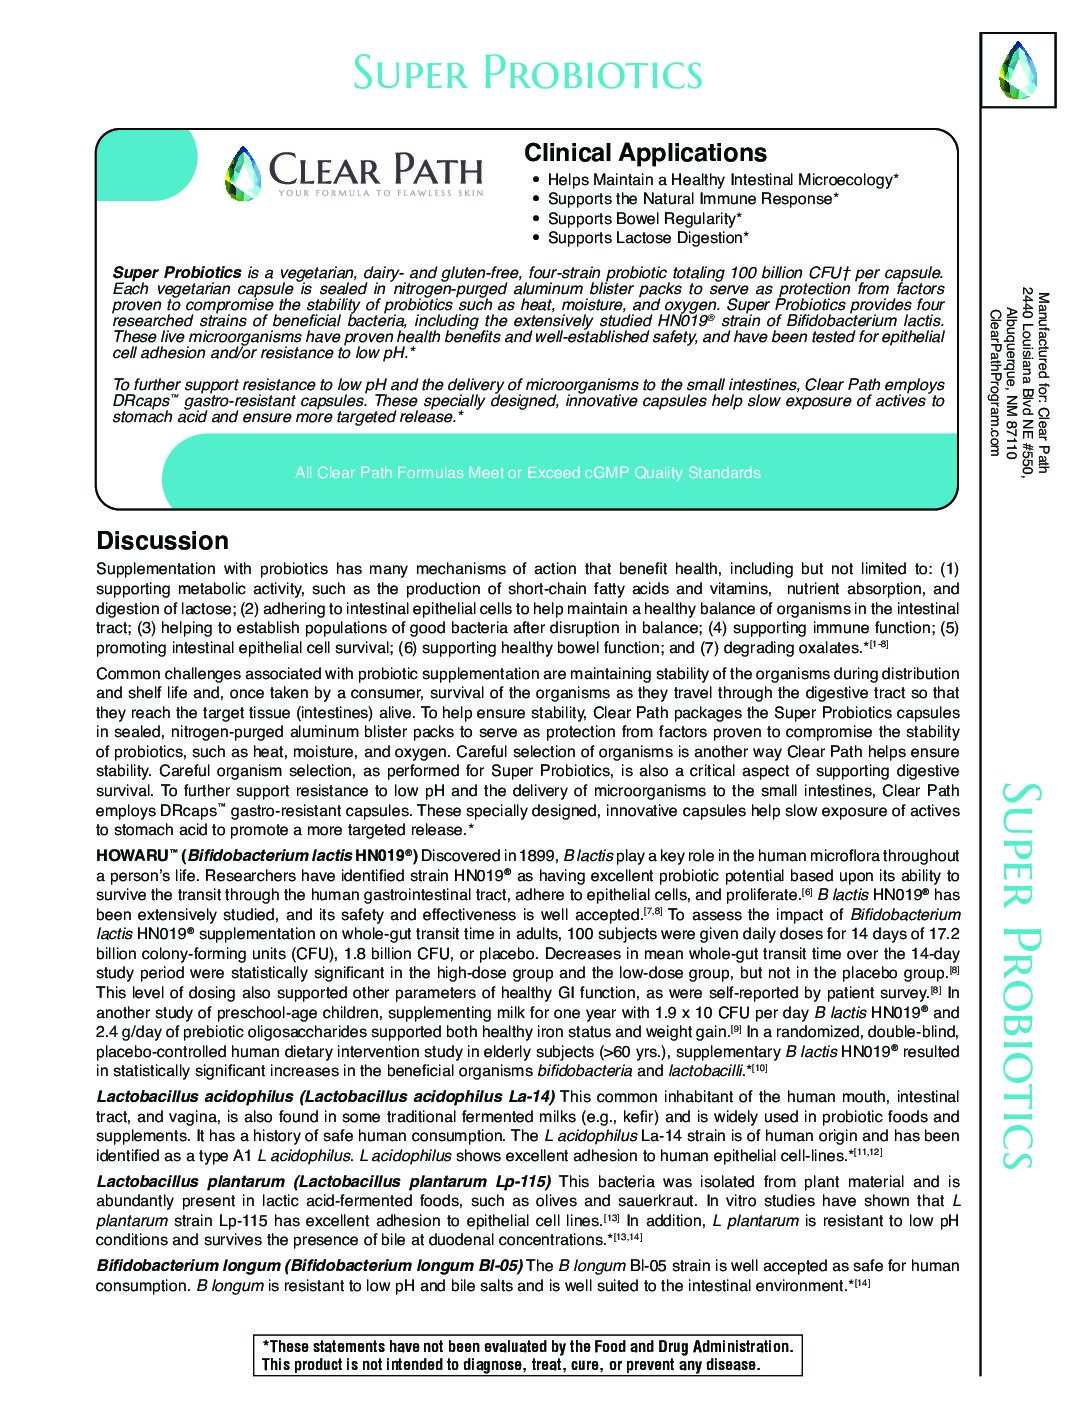 ProbioMax Daily DF 30c_Super Probiotics_DRS-214_081121_LOVAK